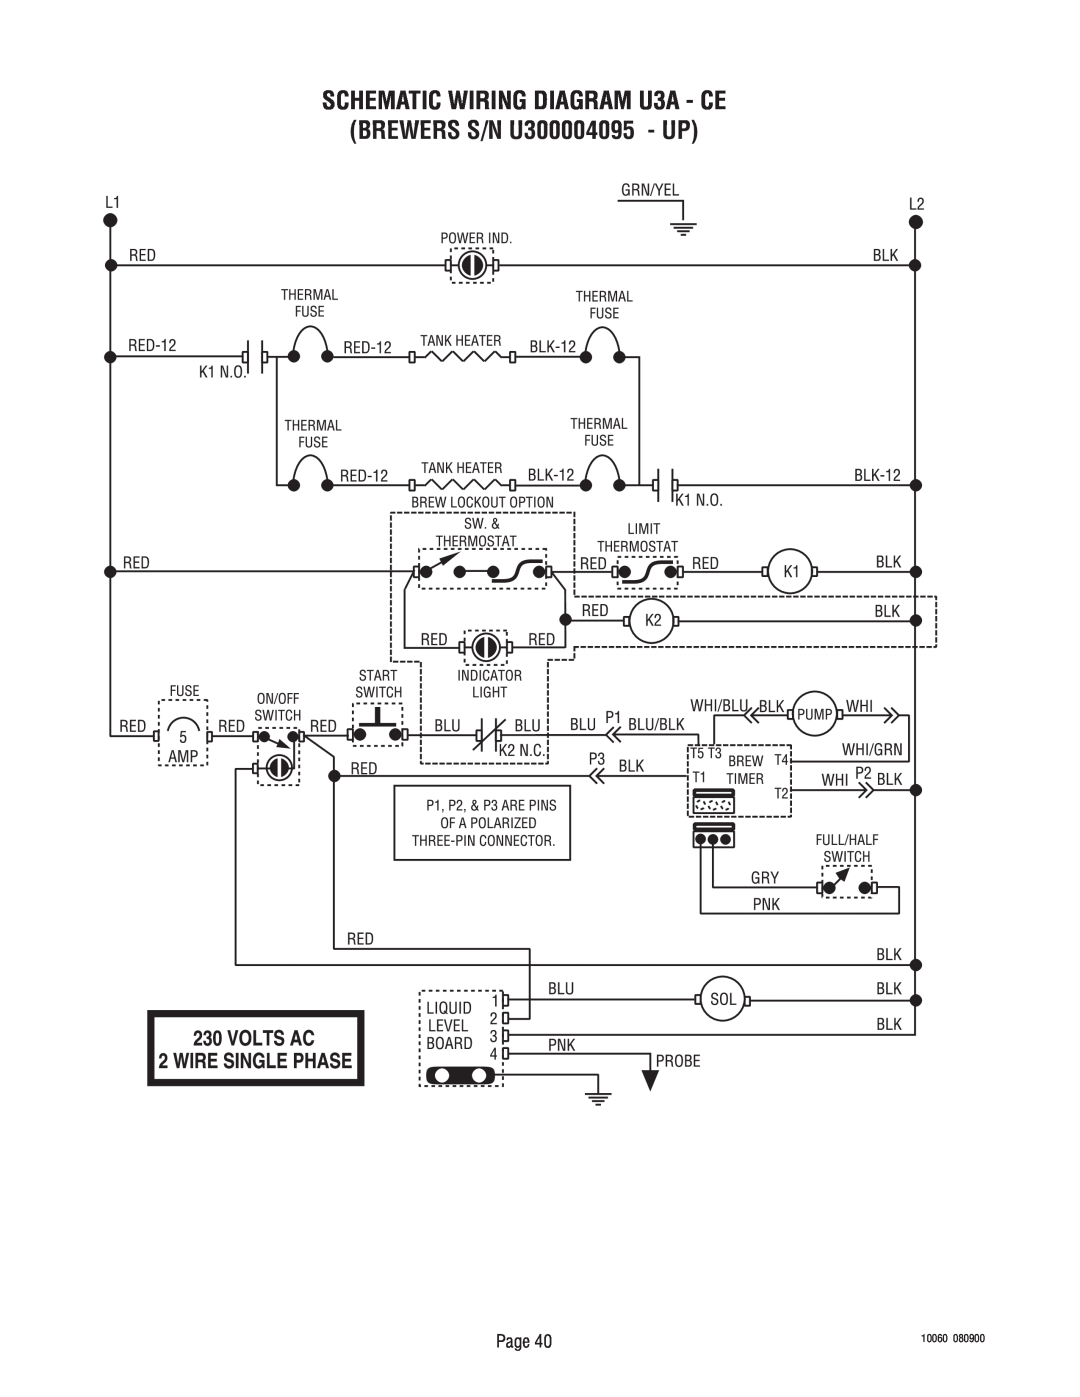 Bunn service manual SCHEMATIC WIRING DIAGRAM U3A - CE BREWERS S/N U300004095 - UP, Page, 10060, 080900 